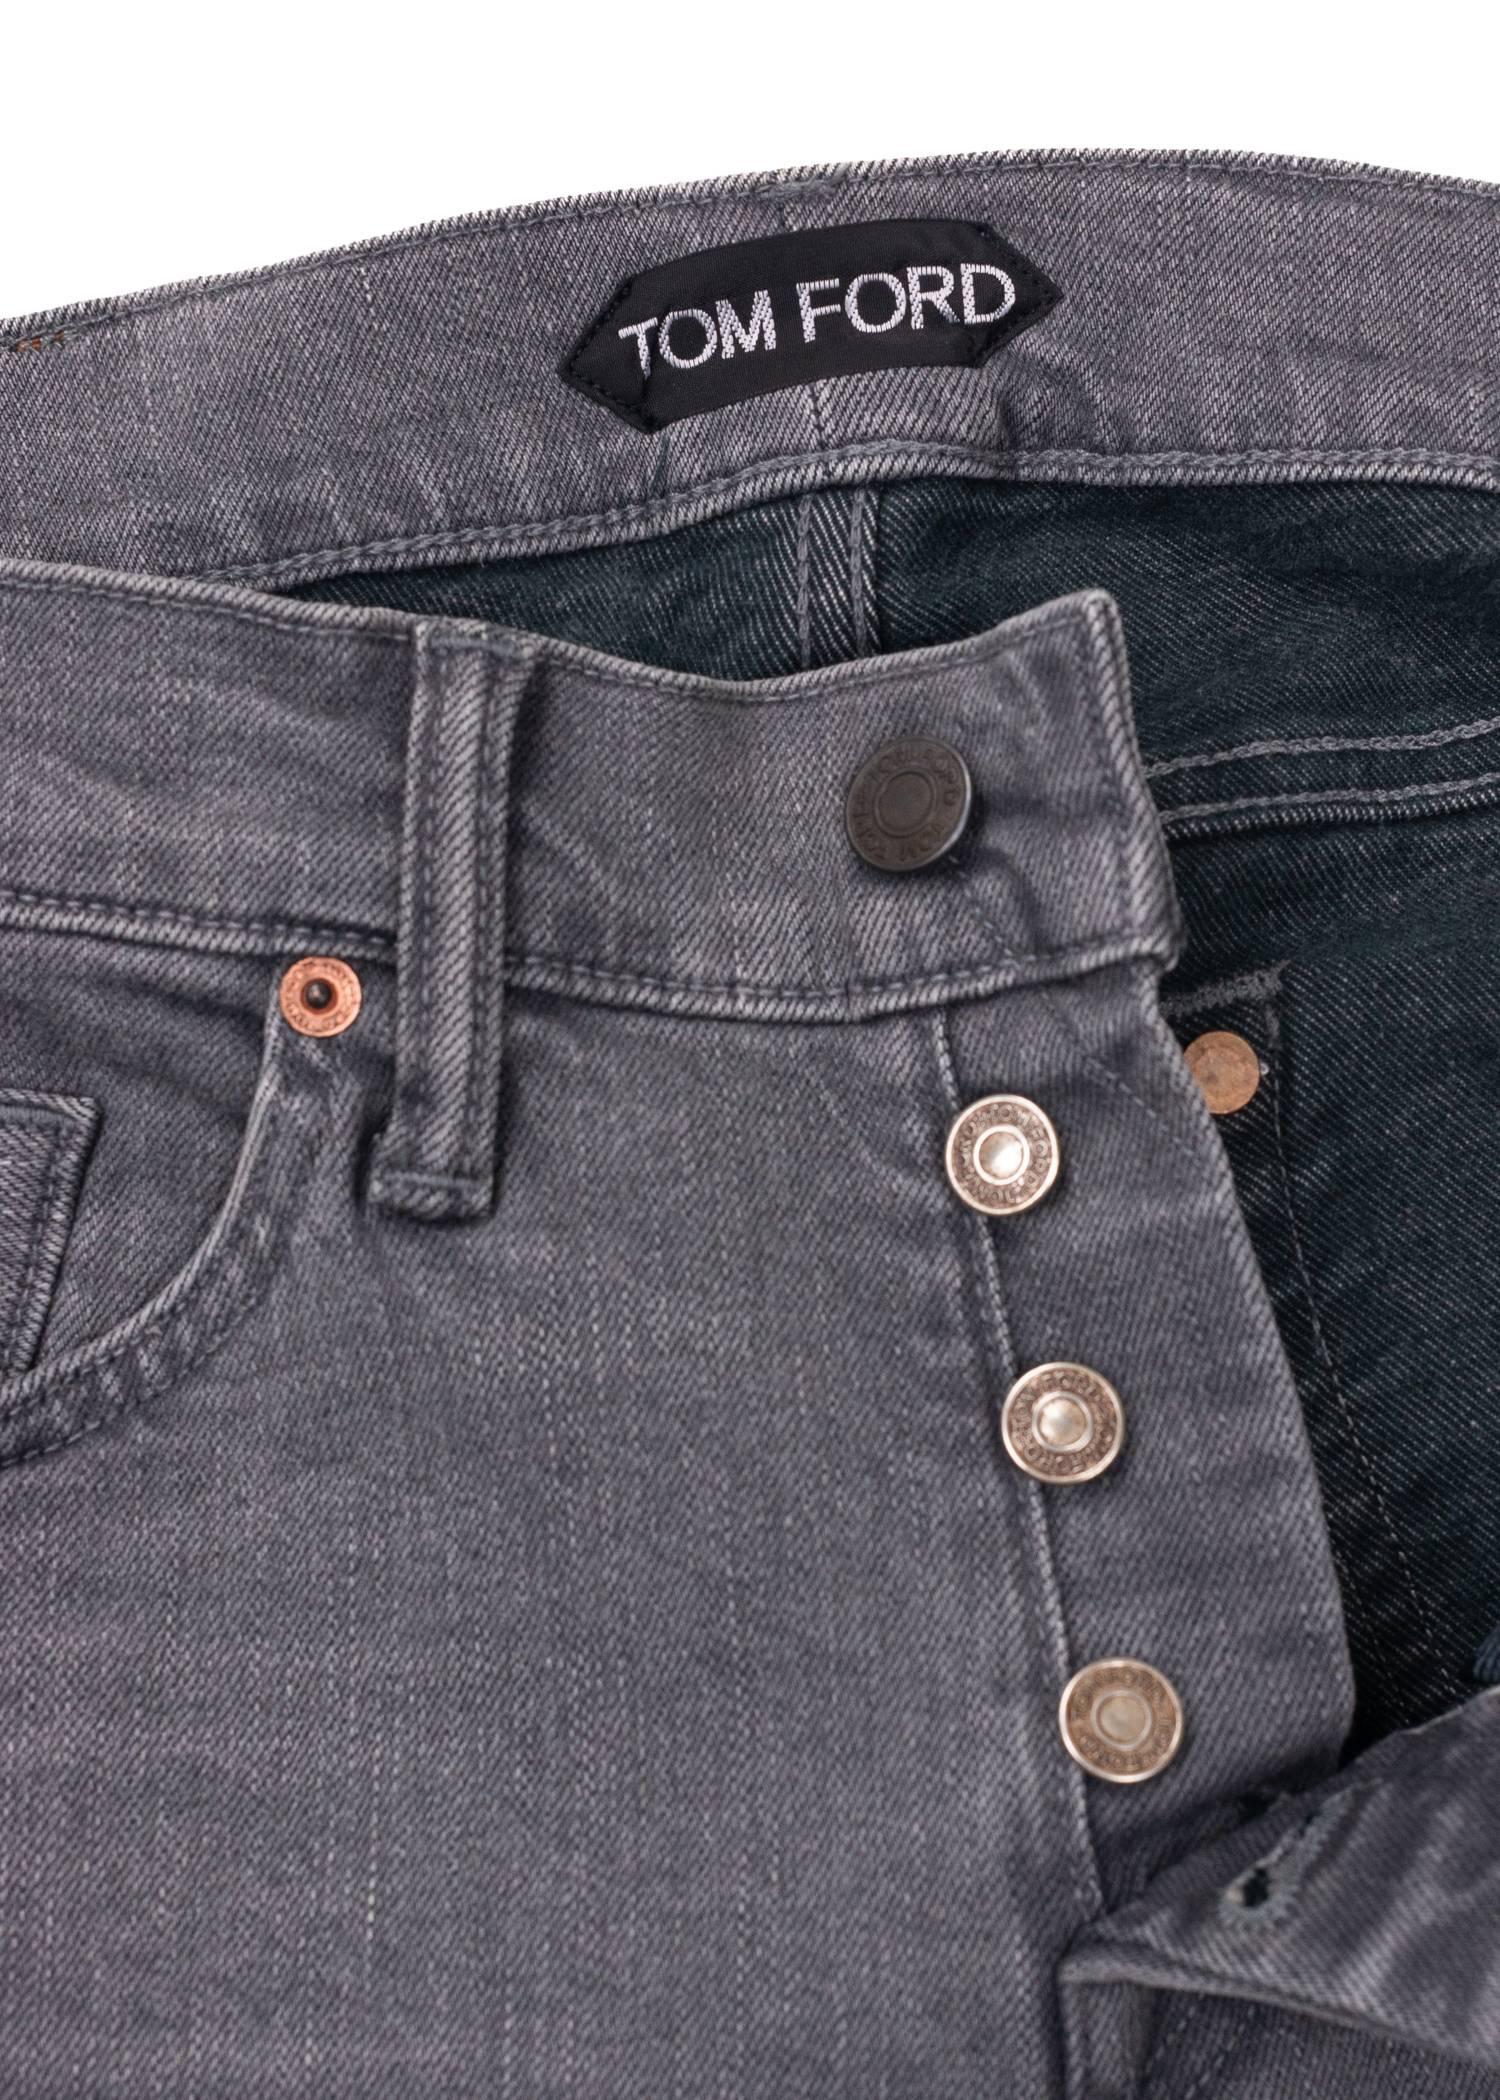 Gray Tom Ford Selvedge Denim Jeans Medium Grey Wash Size 38 Slim Fit Model   For Sale